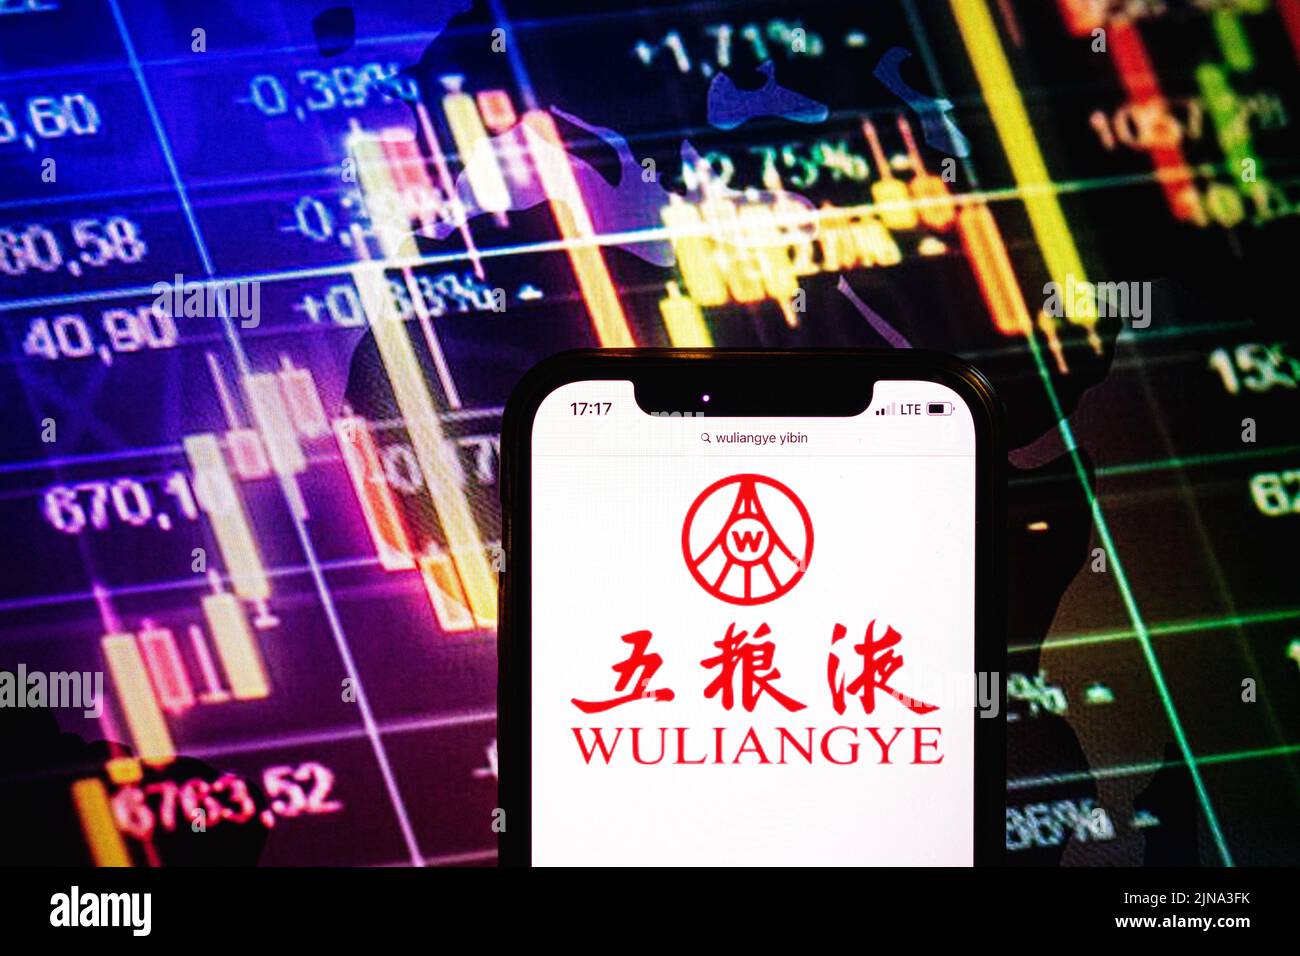 KONSKIE, POLAND - August 09, 2022: Smartphone displaying logo of Wuliangye Yibin company on stock exchange diagram background Stock Photo